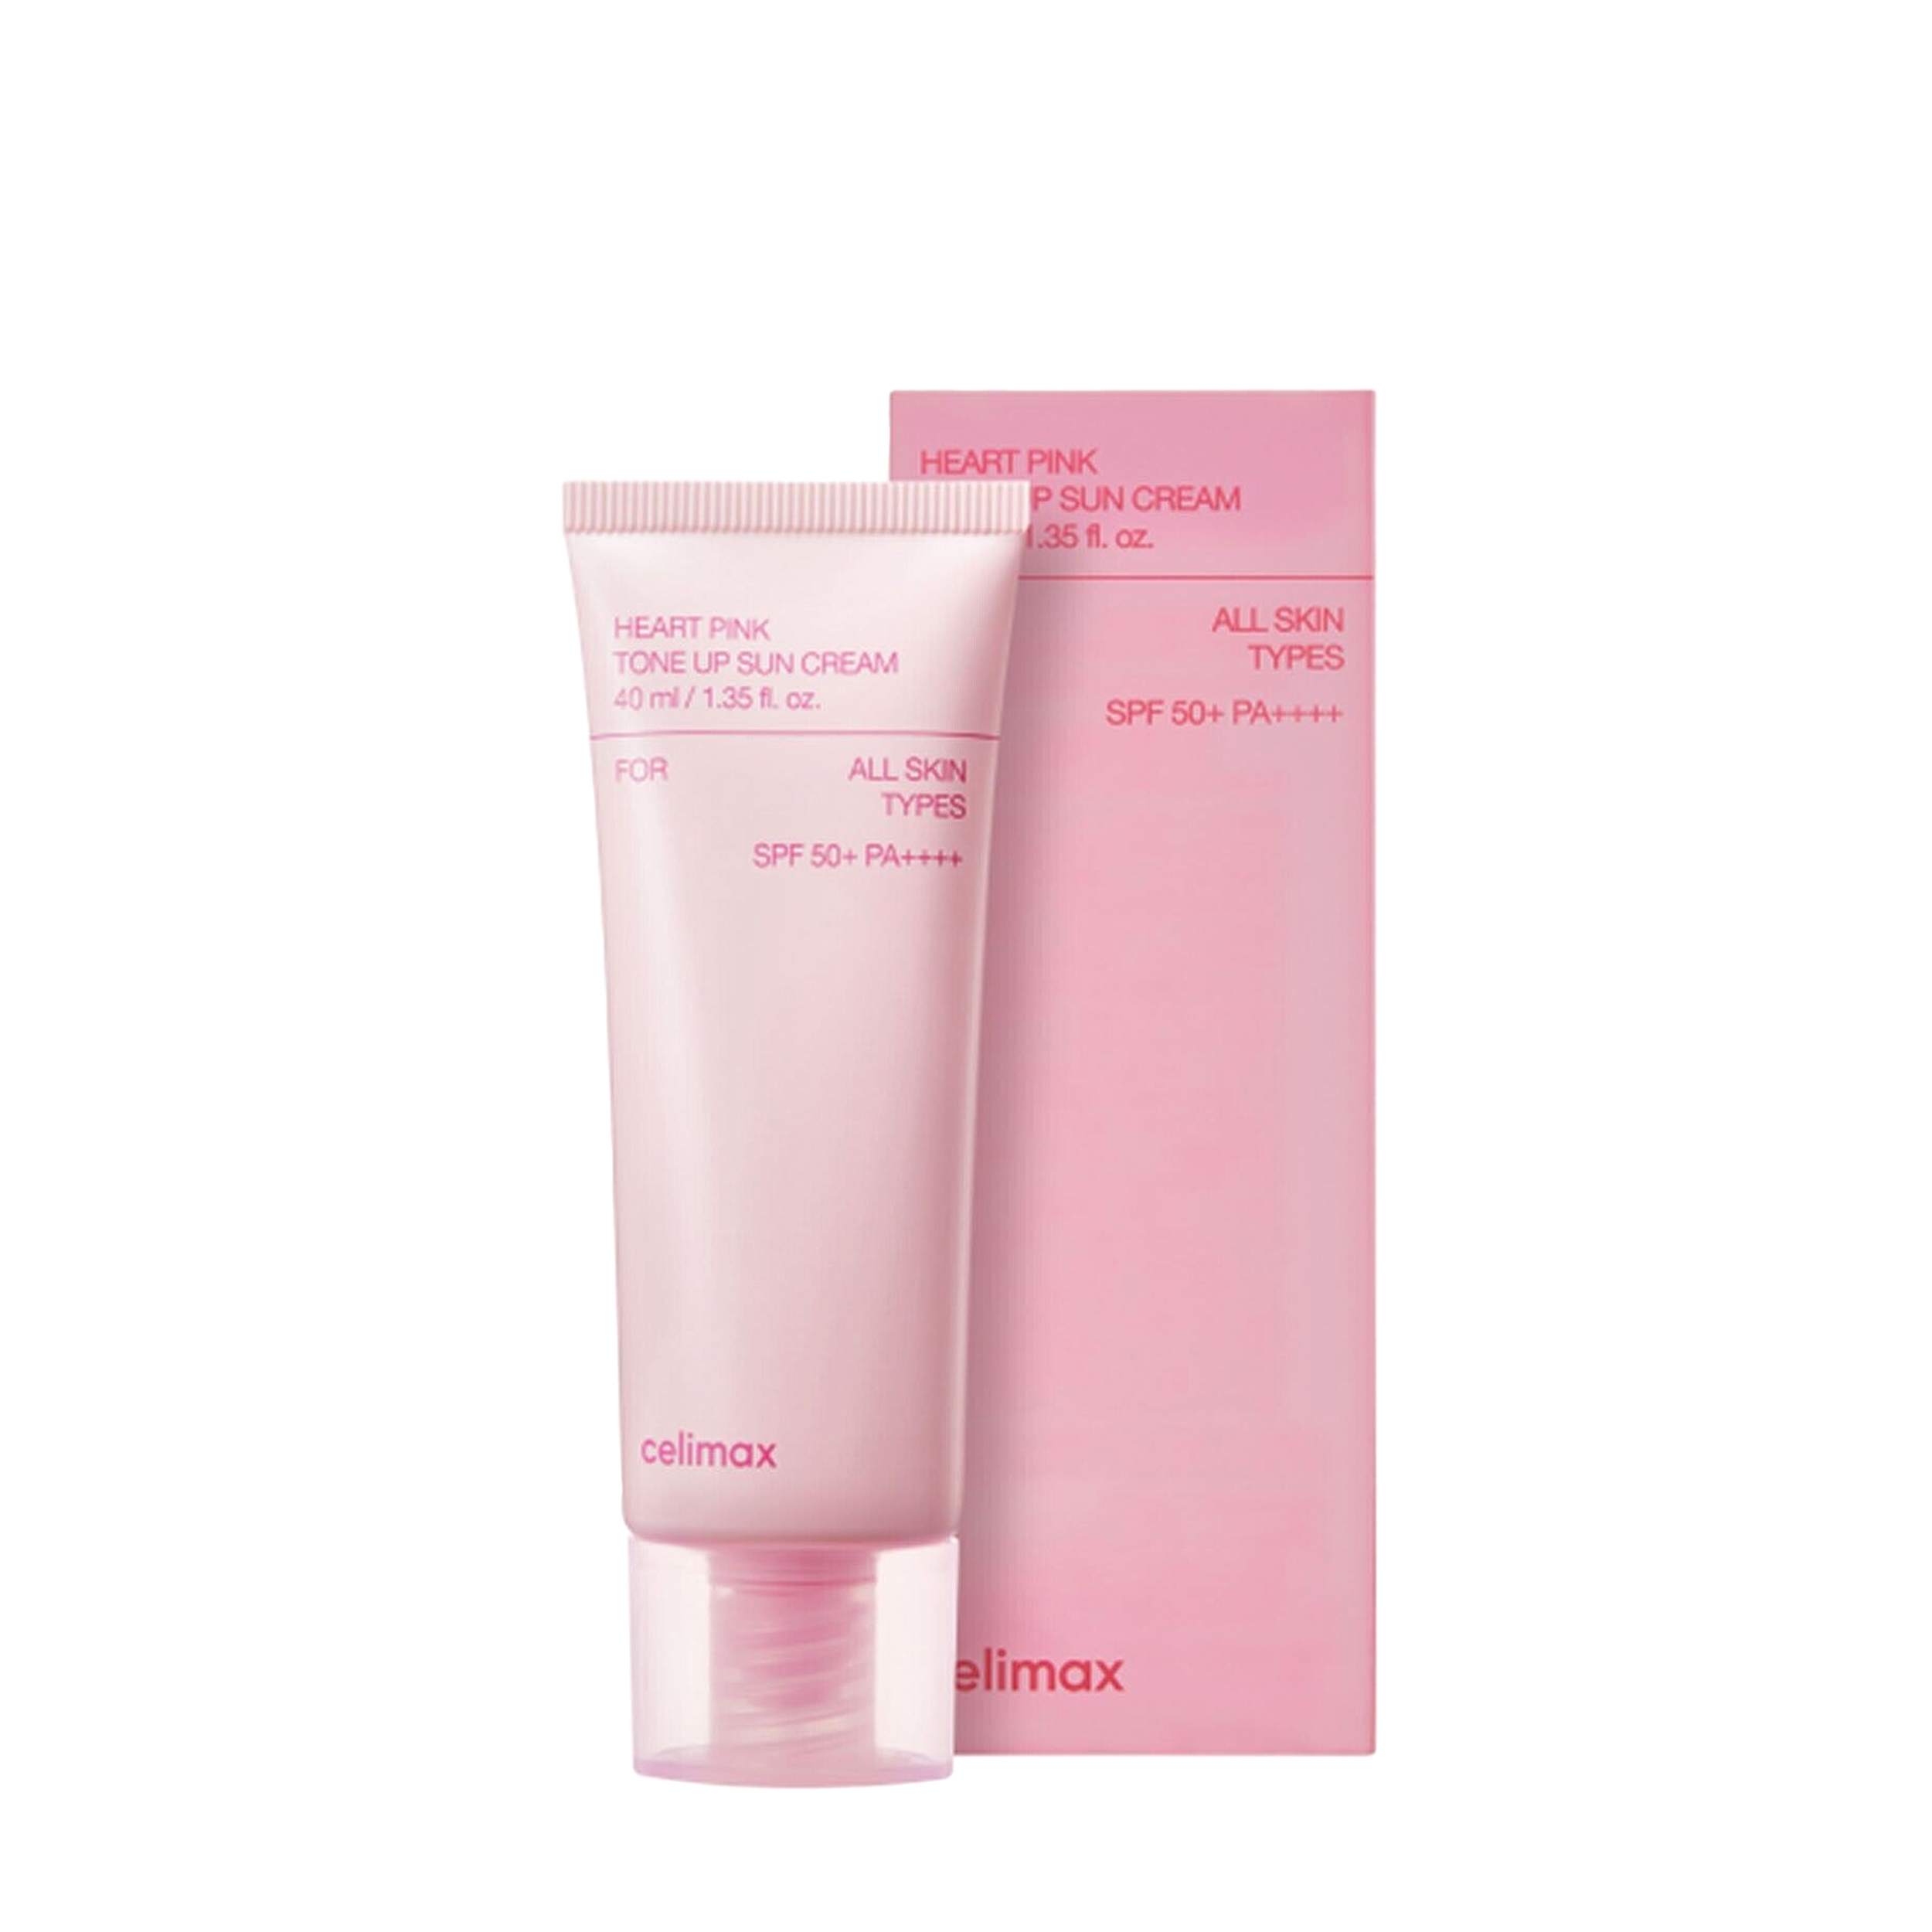 Celimax Celimax Cолнцезащитный крем, выравнивающий тон кожи Celimax Heart Pink Tone Up Sun Cream SPF50+ PA++++ 40 мл